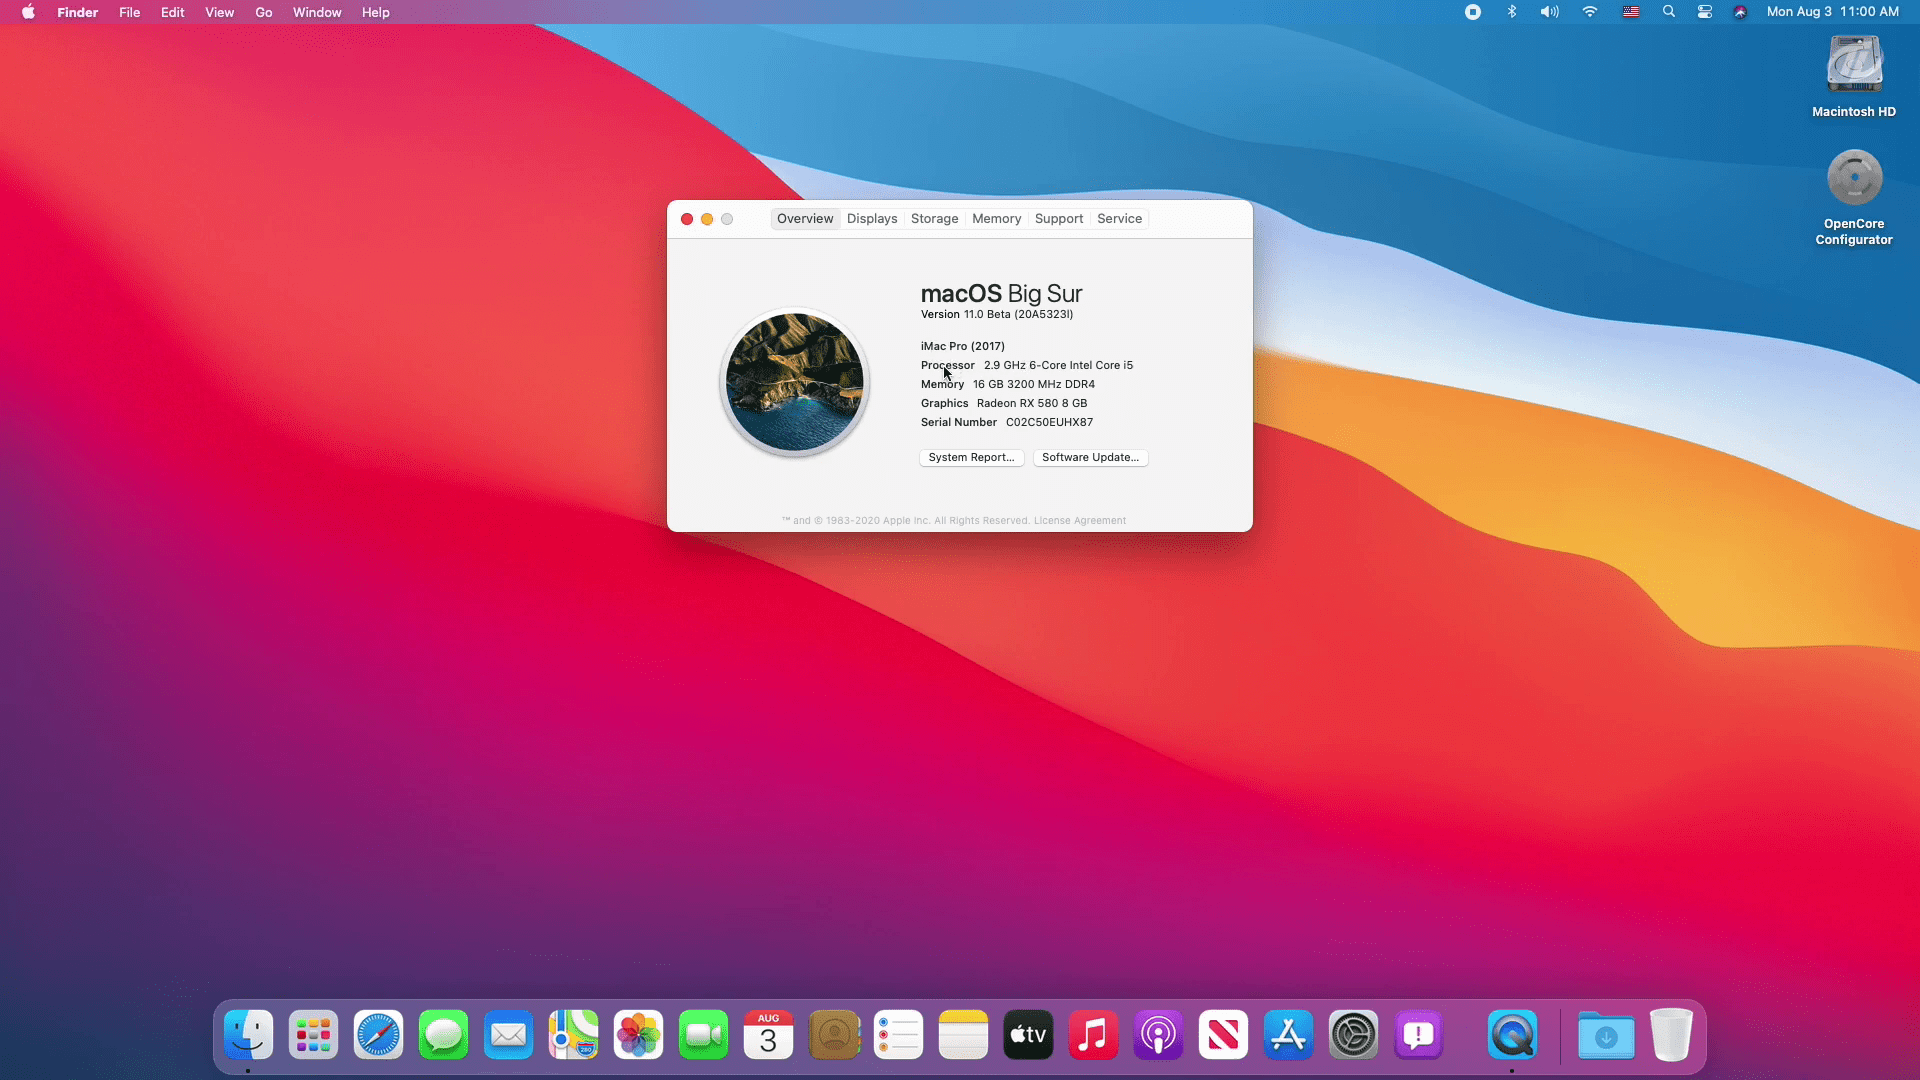 Installed macOS Big Sur